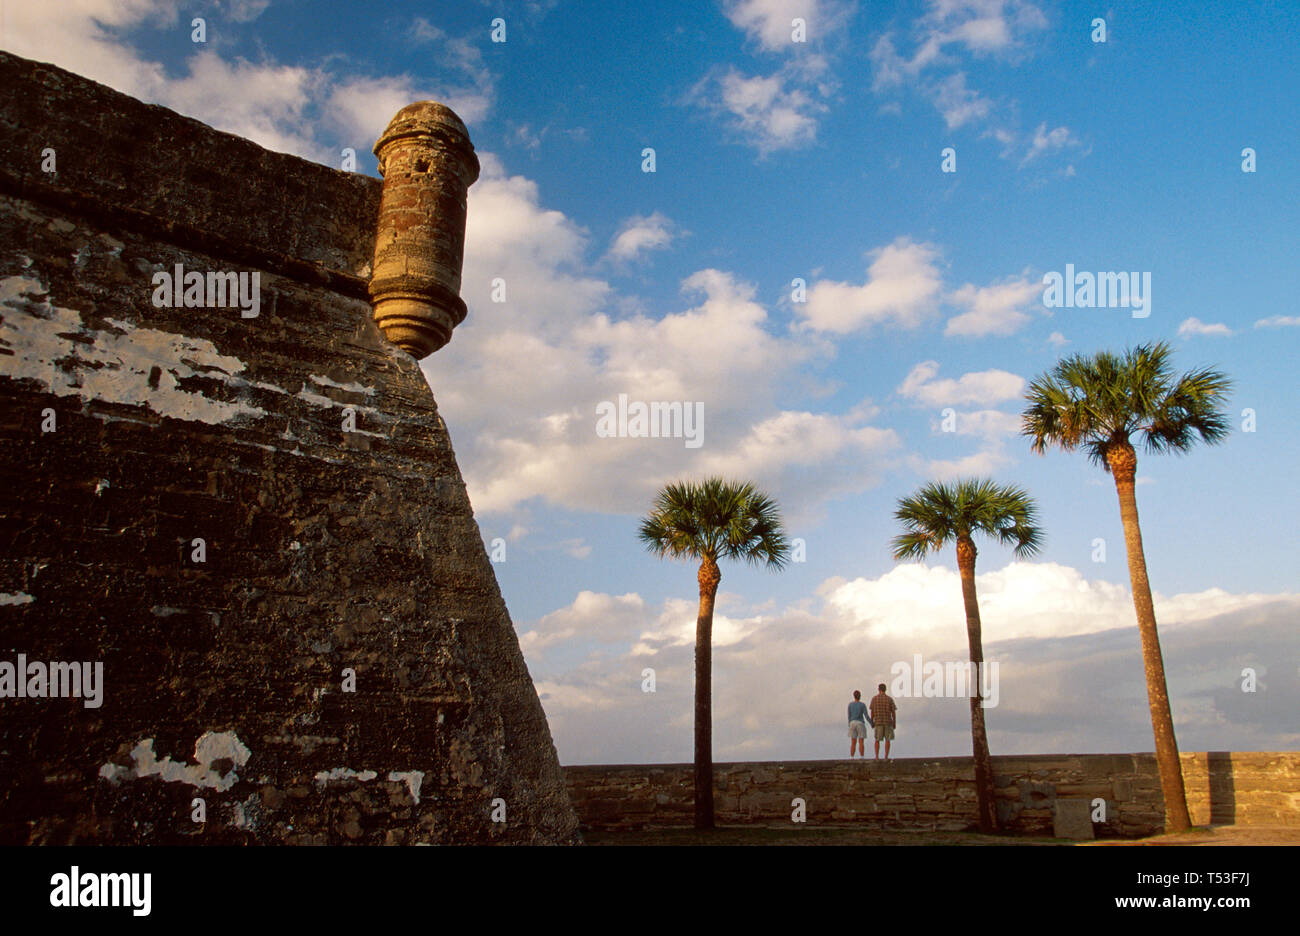 Florida St. Augustine Castillo de San Marcos,built 1672 coquina walls withstood cannon fire US oldest city,FL342 Stock Photo